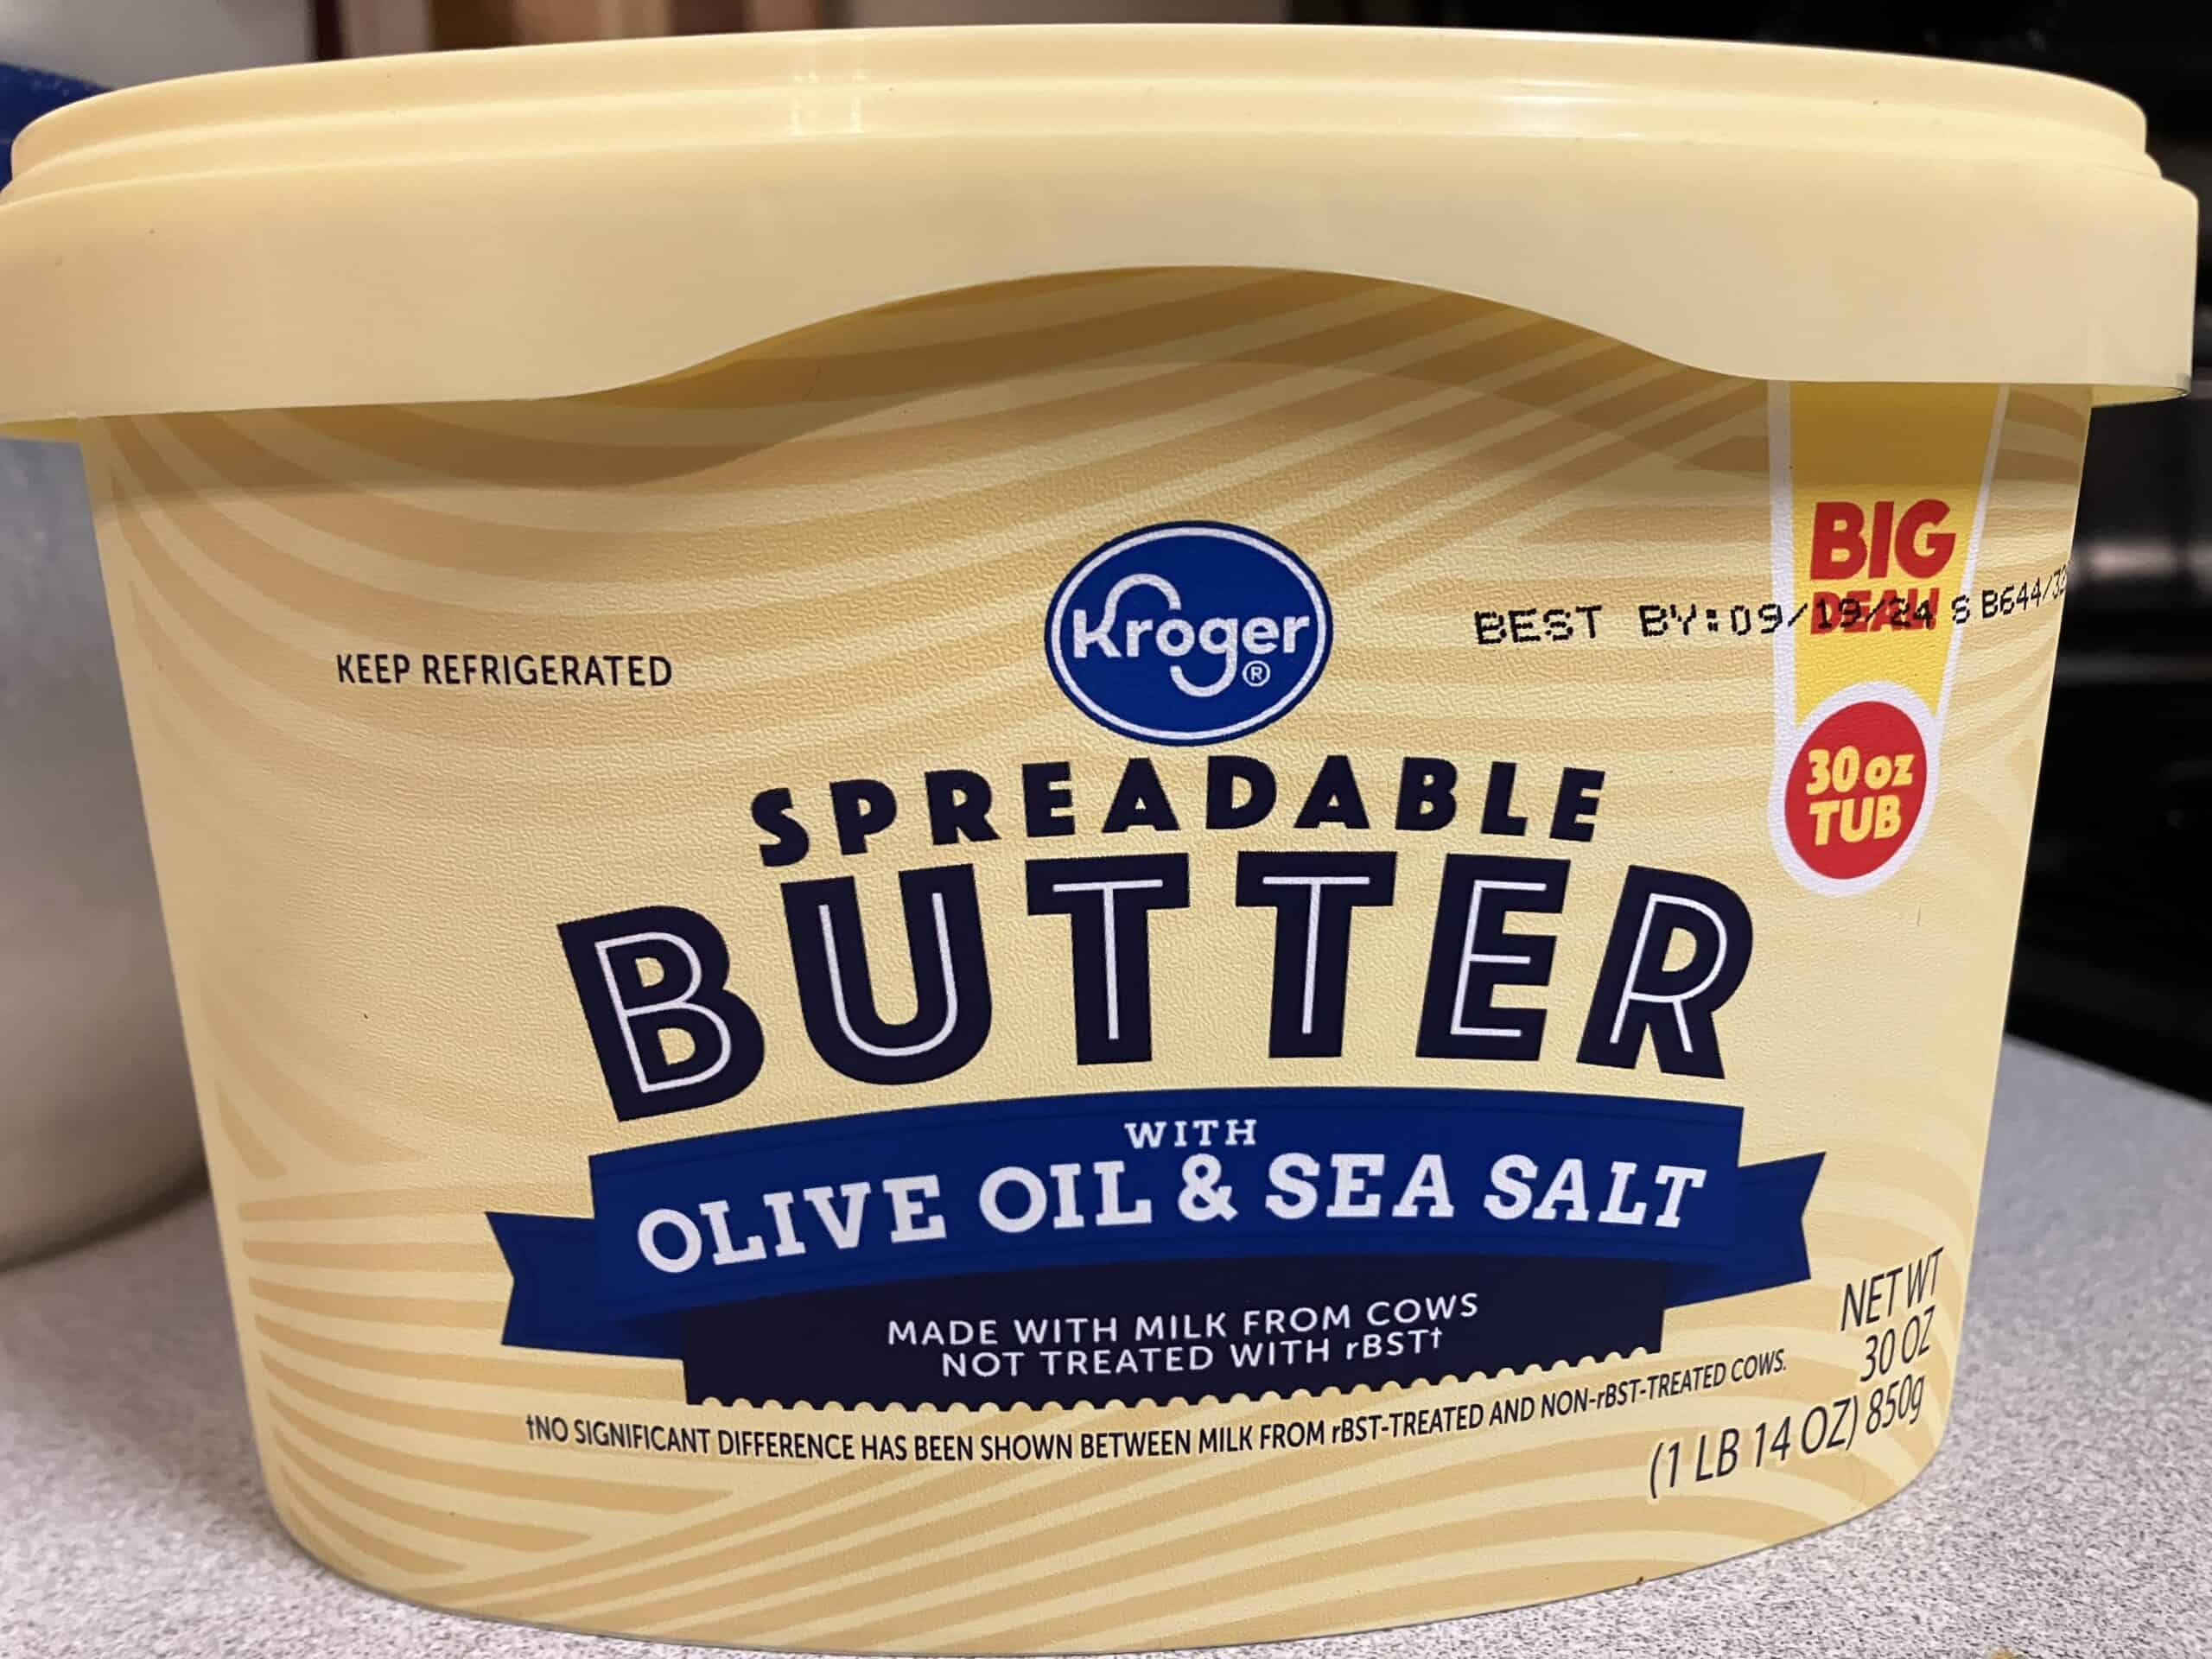 Kroger butter with olive oil and sea salt